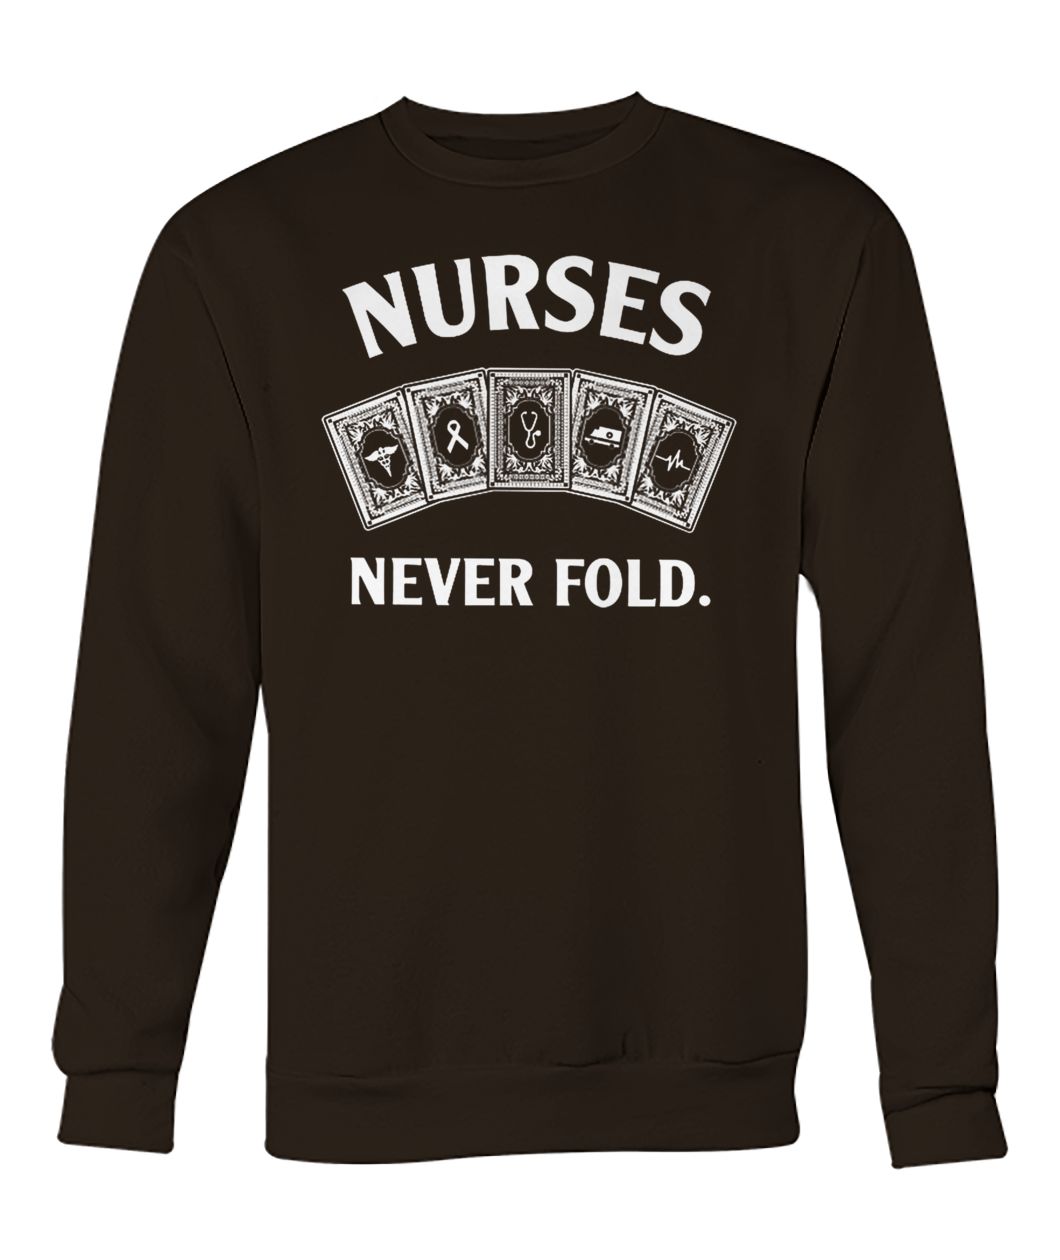 Nurse never fold crew neck sweatshirt